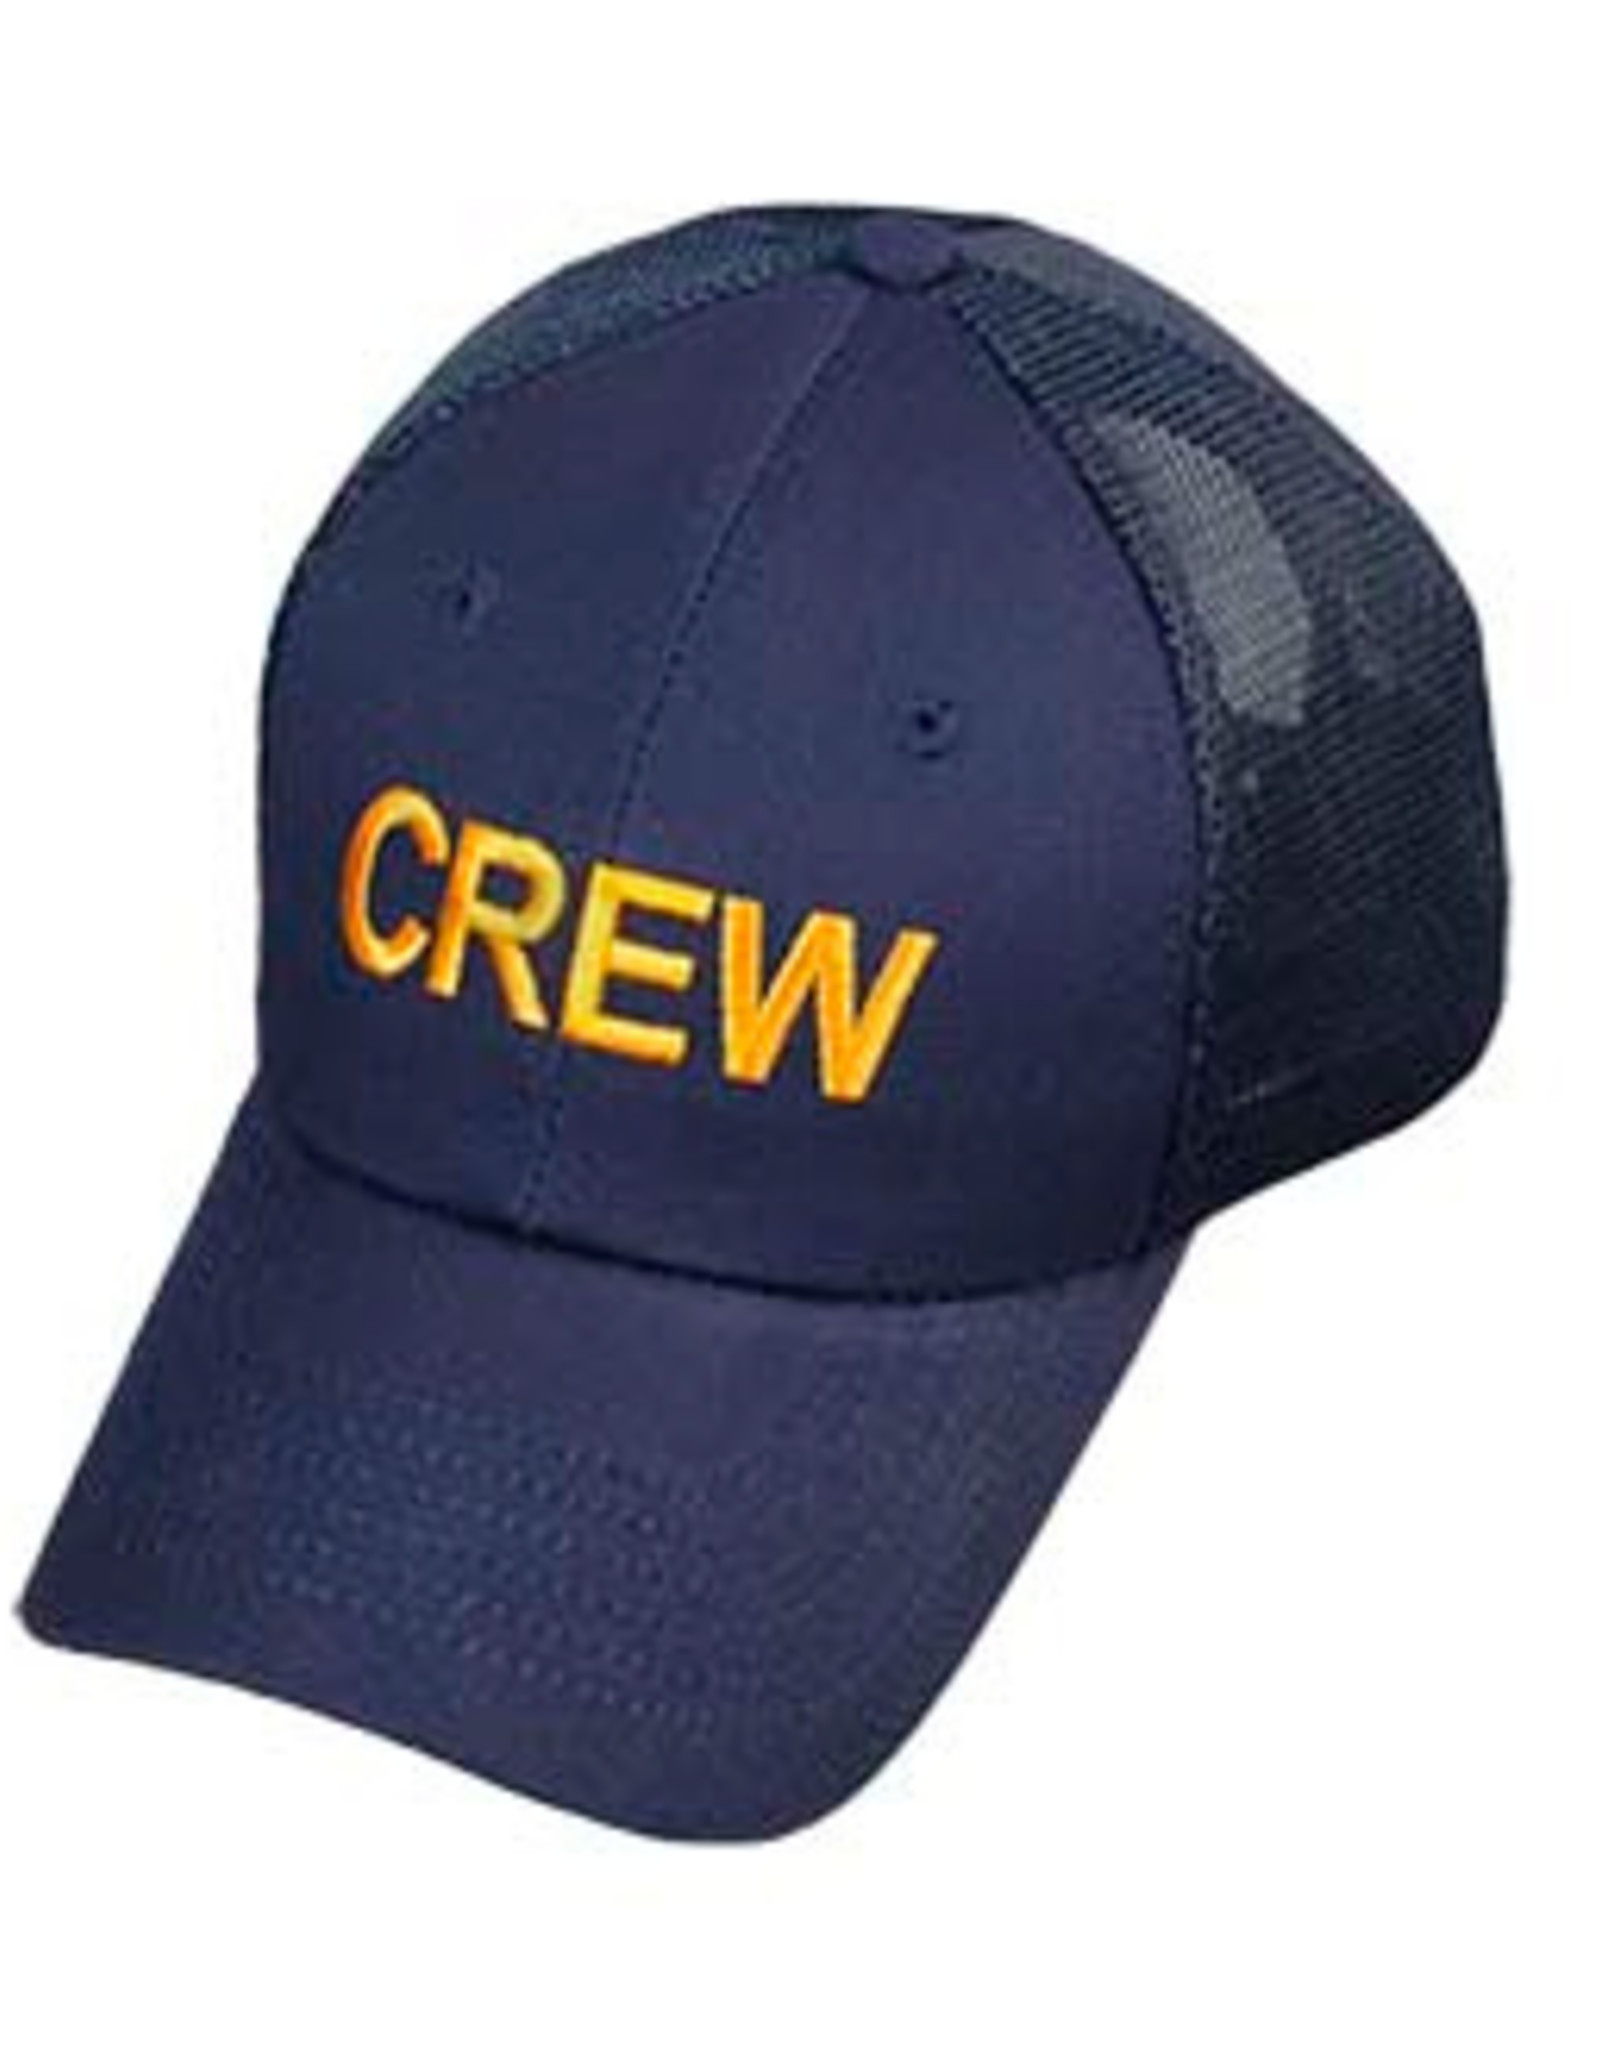 BRONER BRONER CREW BALL CAP